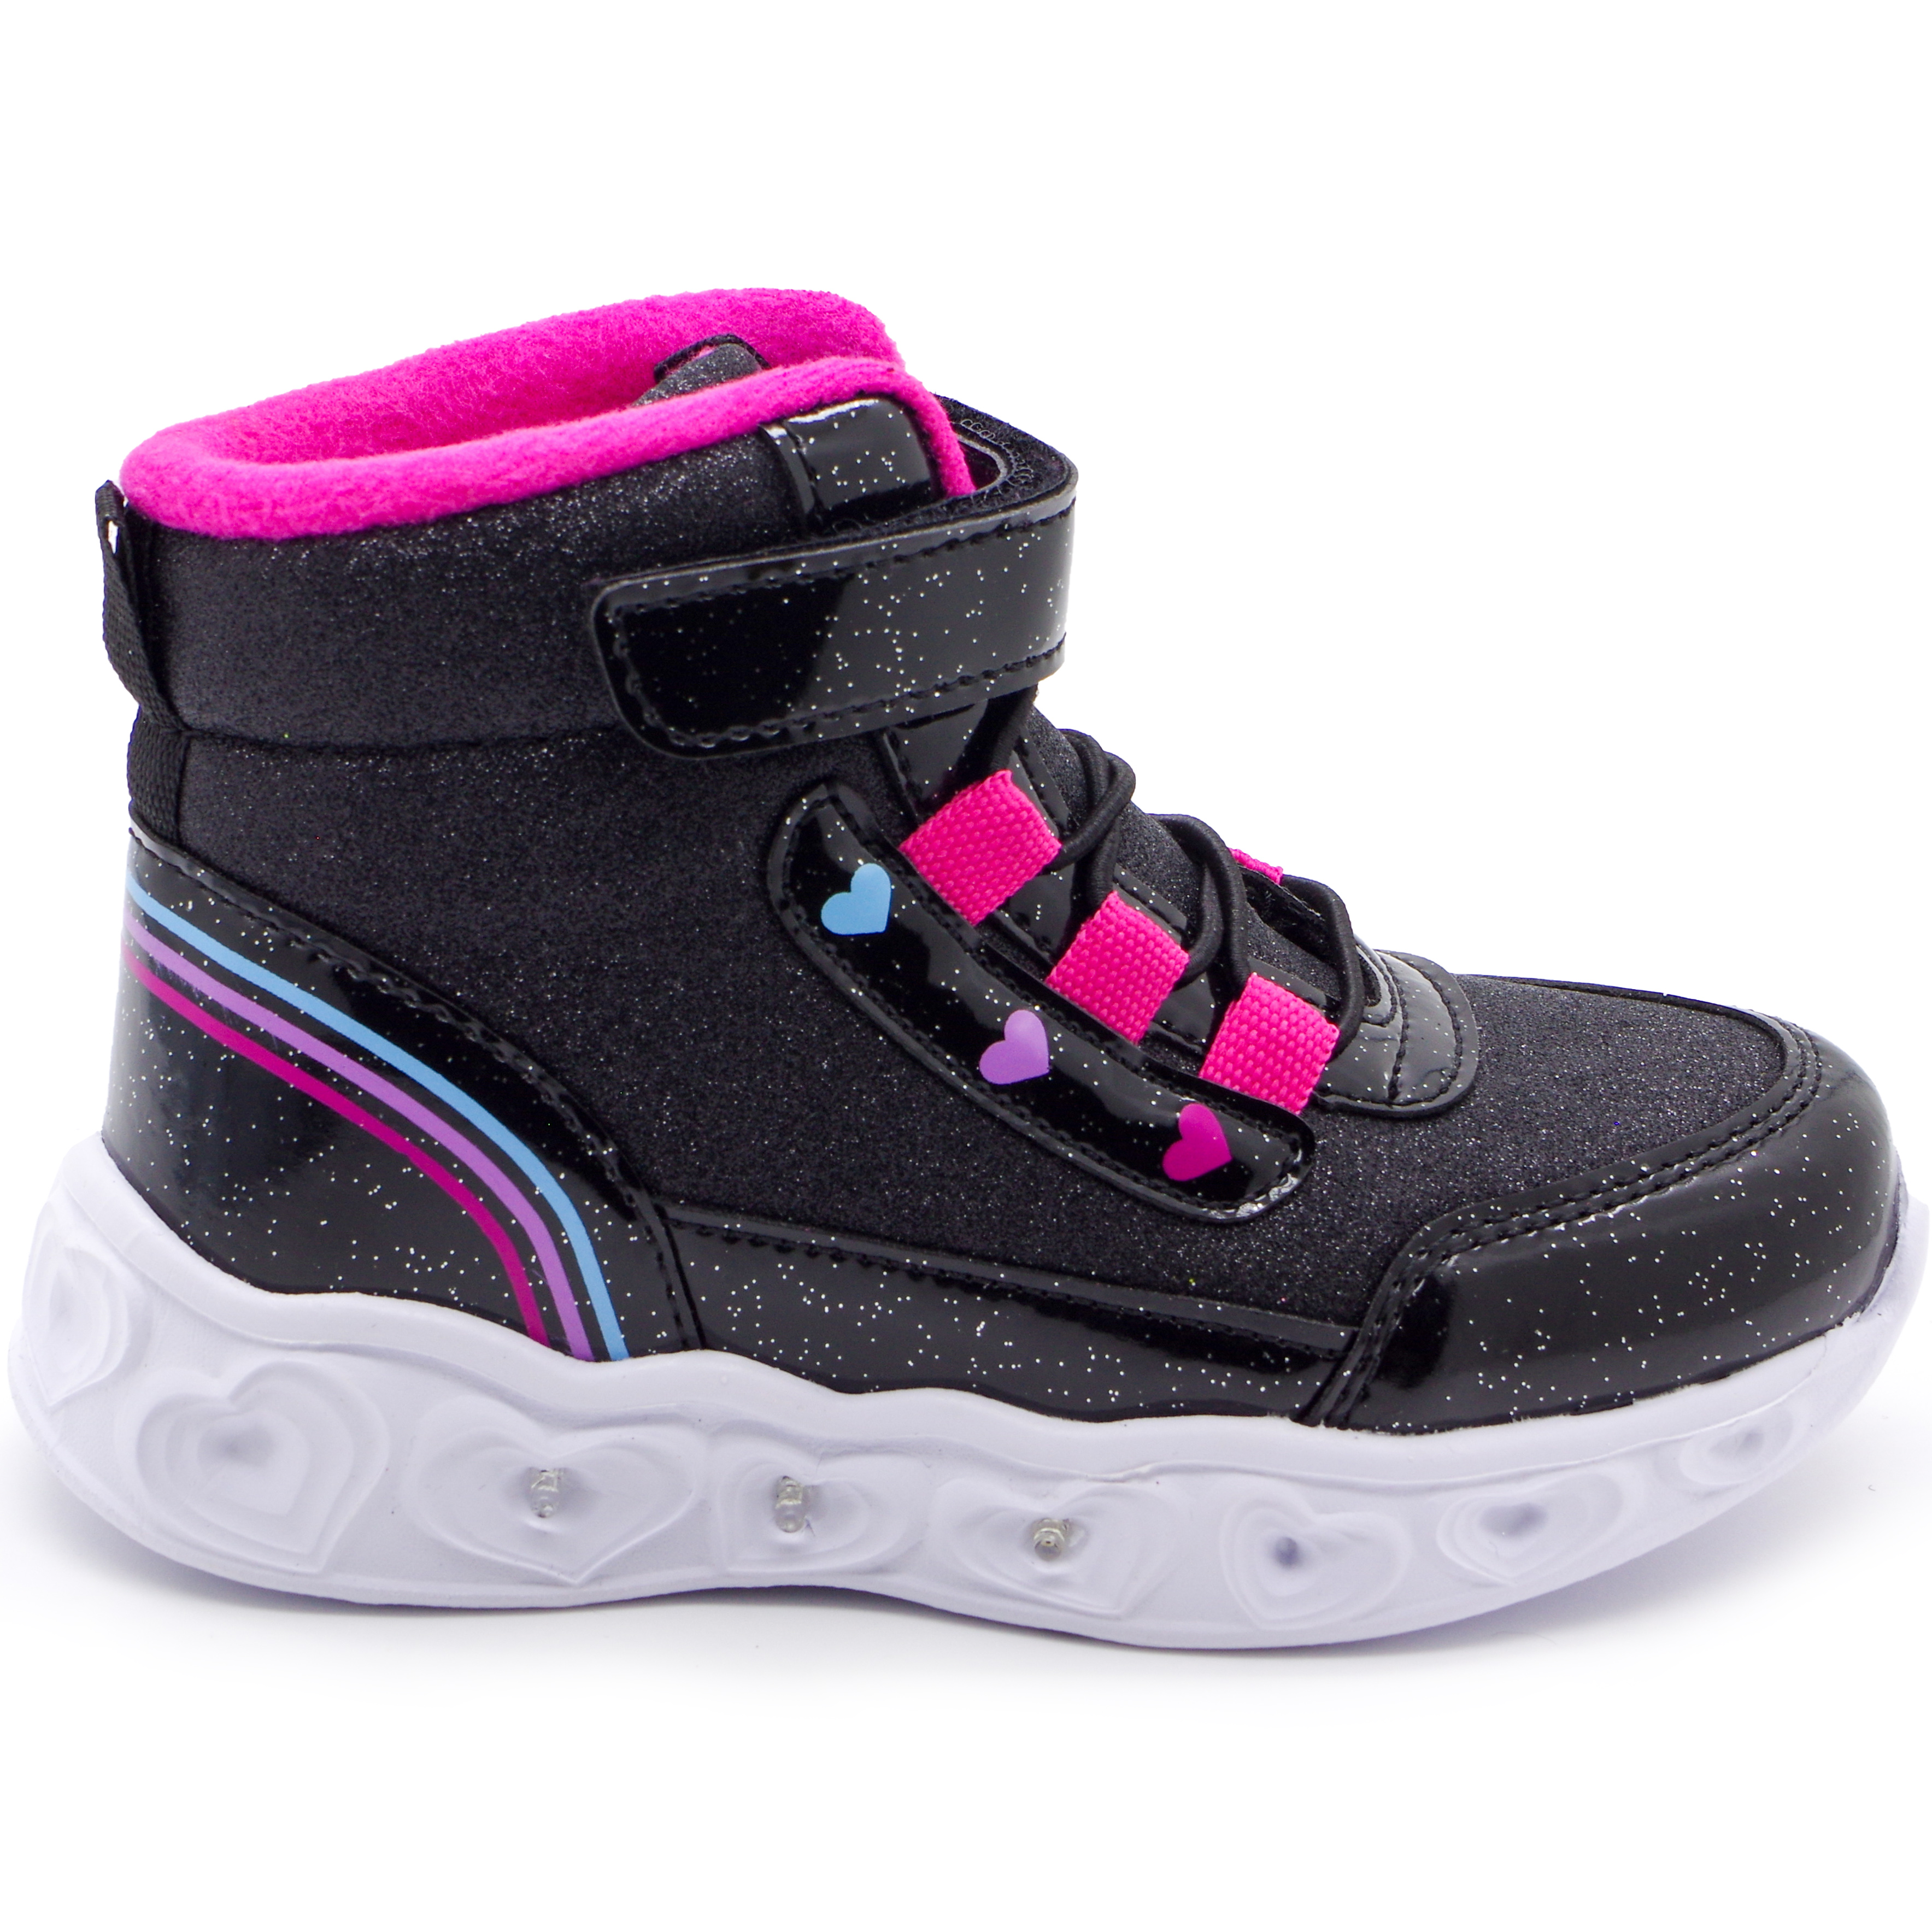 LED черевики дитячі (2215) для дівчинки, матеріал Текстиль, Чорний колір, 27-31 розміри – Sole Kids. Фото 2